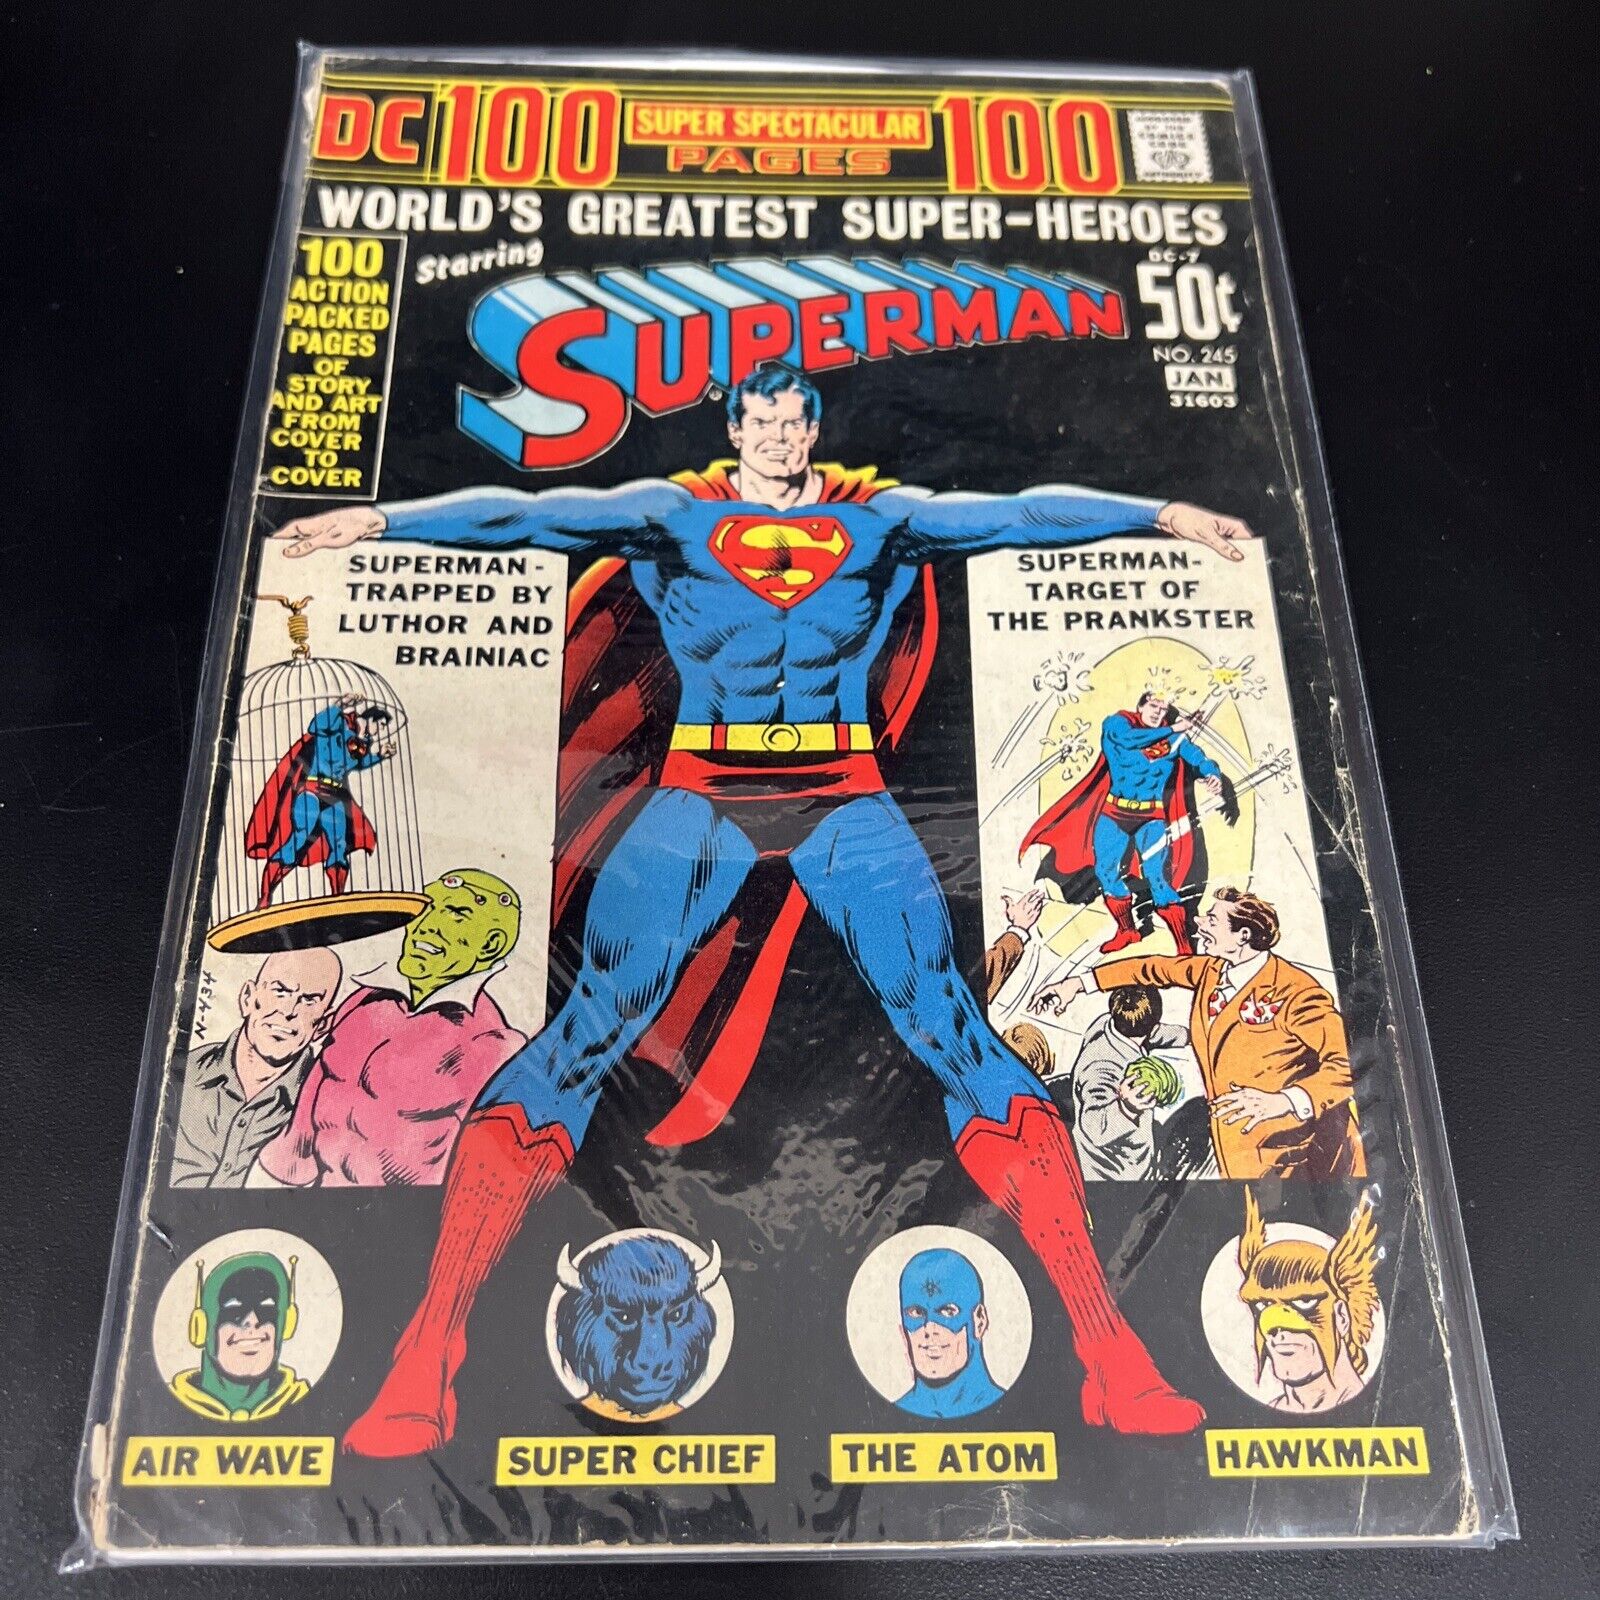 SUPERMAN #245 (1971) 100 Super Spectacular Pages, Curt Swan, DC Comics